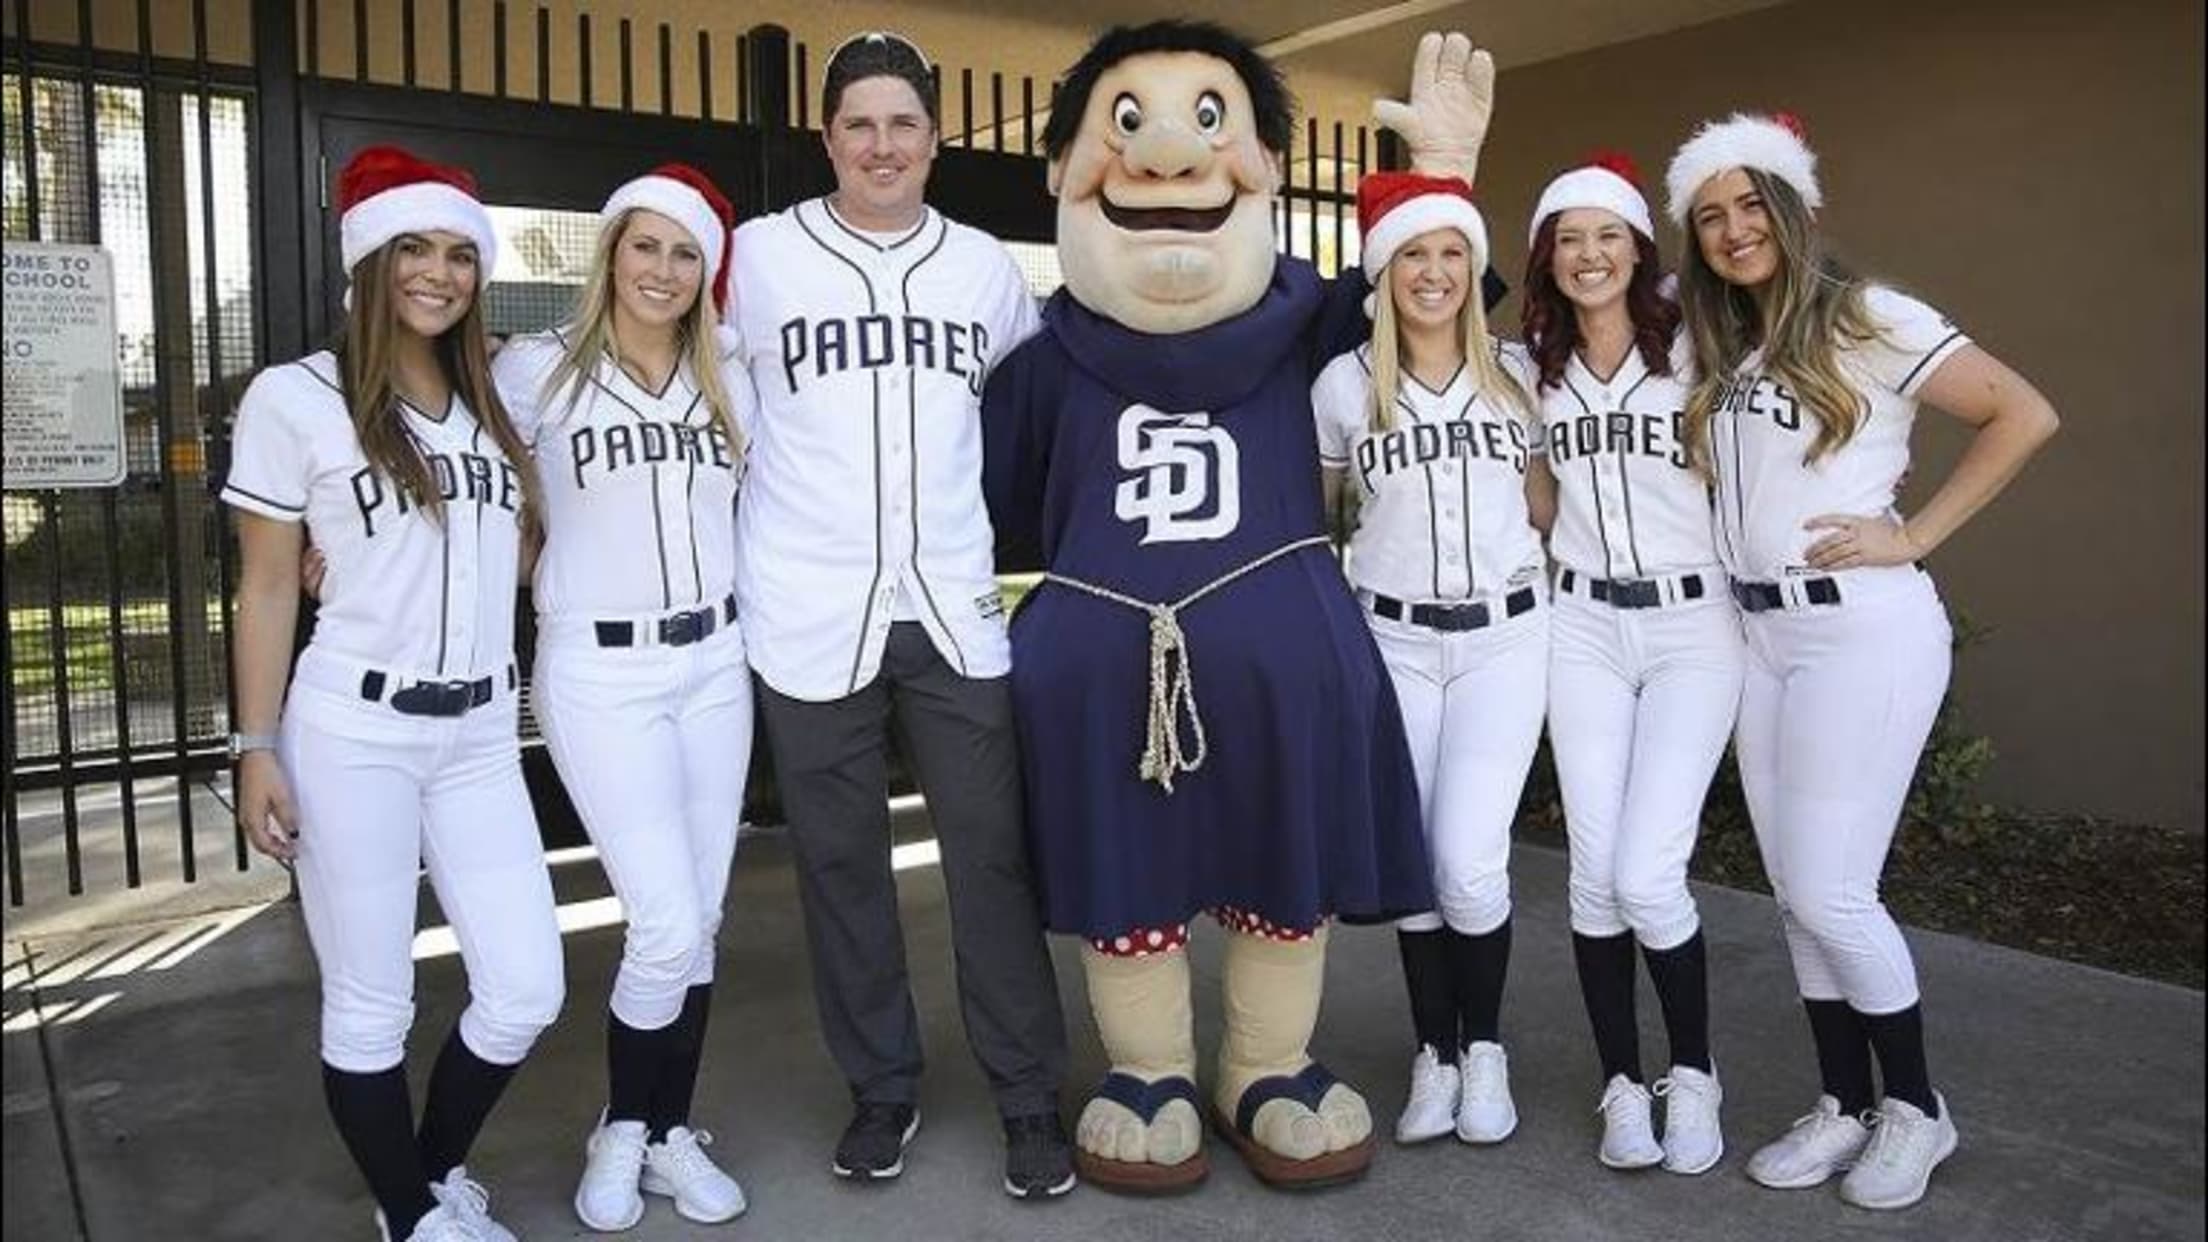 Successful #FuturePadres jersey - San Diego Padres